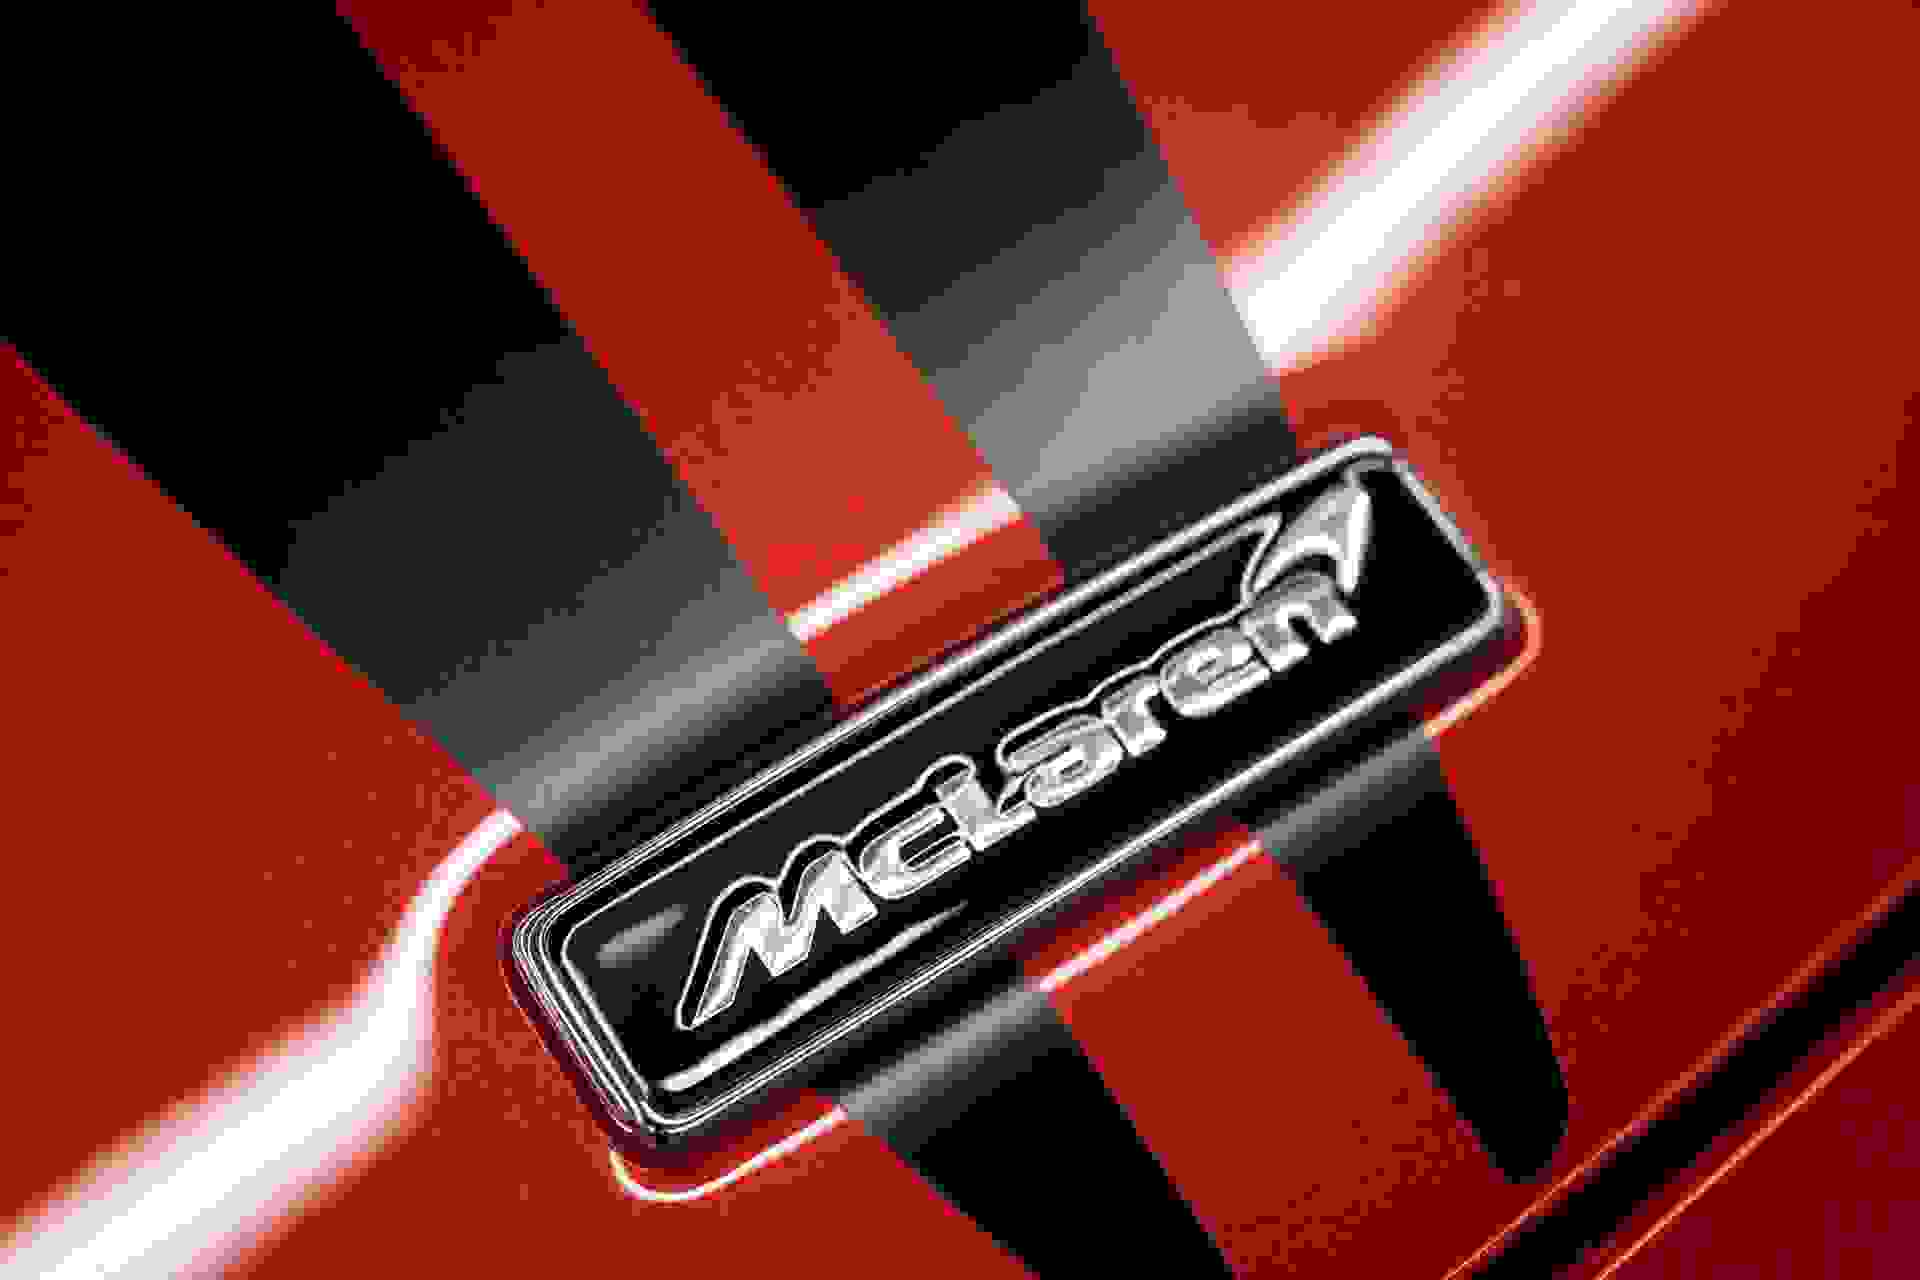 McLaren 570S Photo 03830975-f237-4b68-86cf-a0da0bb86238.jpg